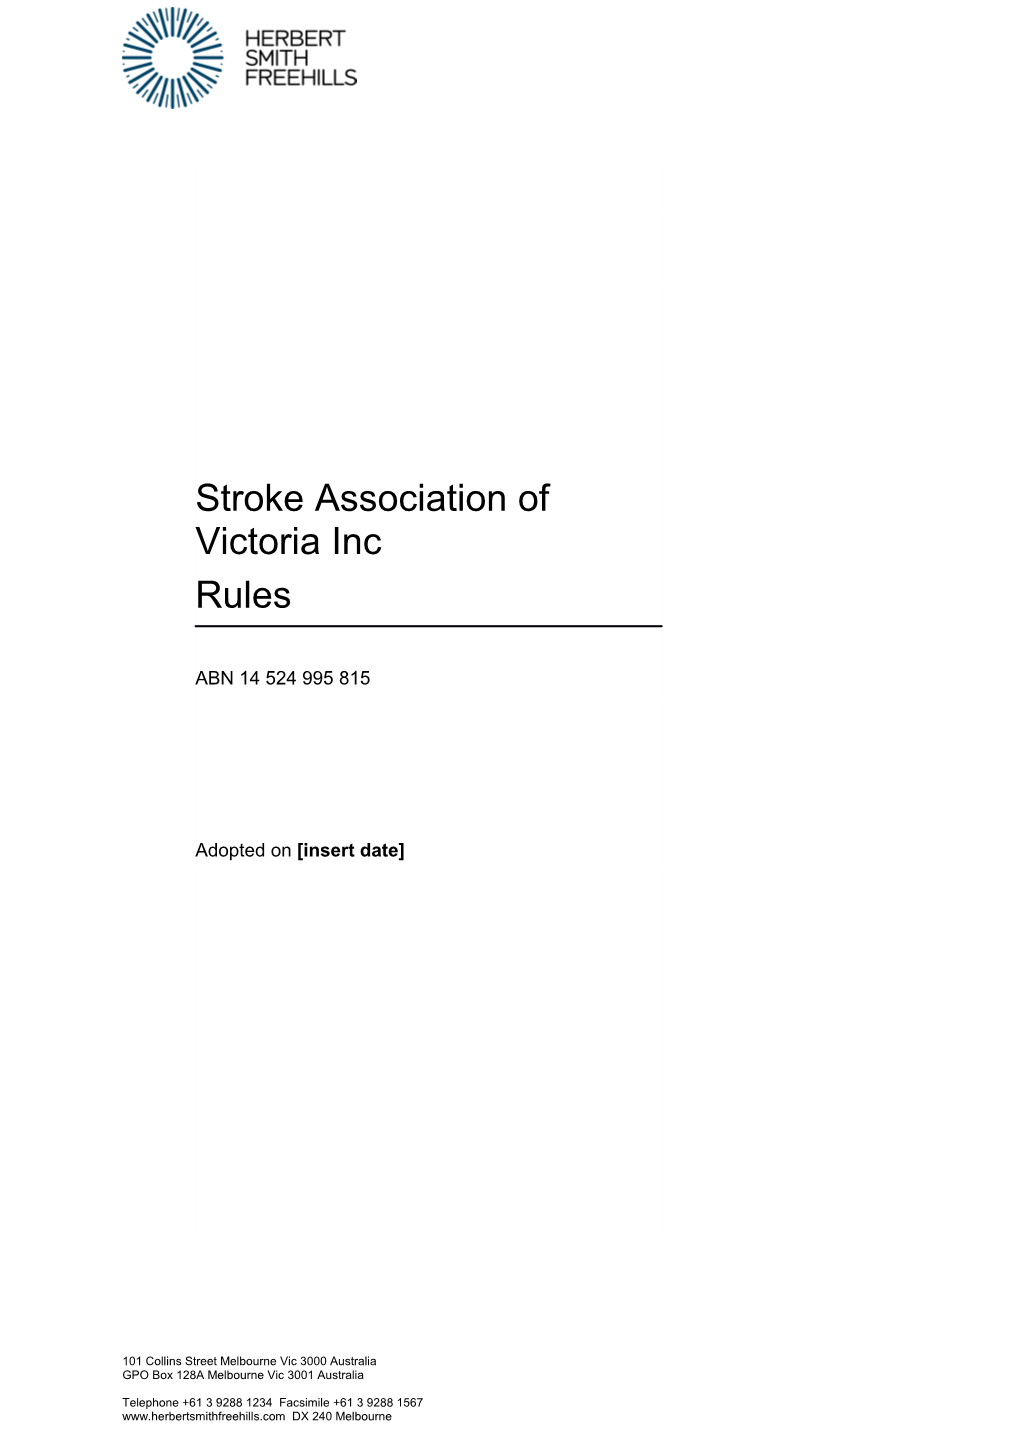 Stroke Association of Victoria Constitution